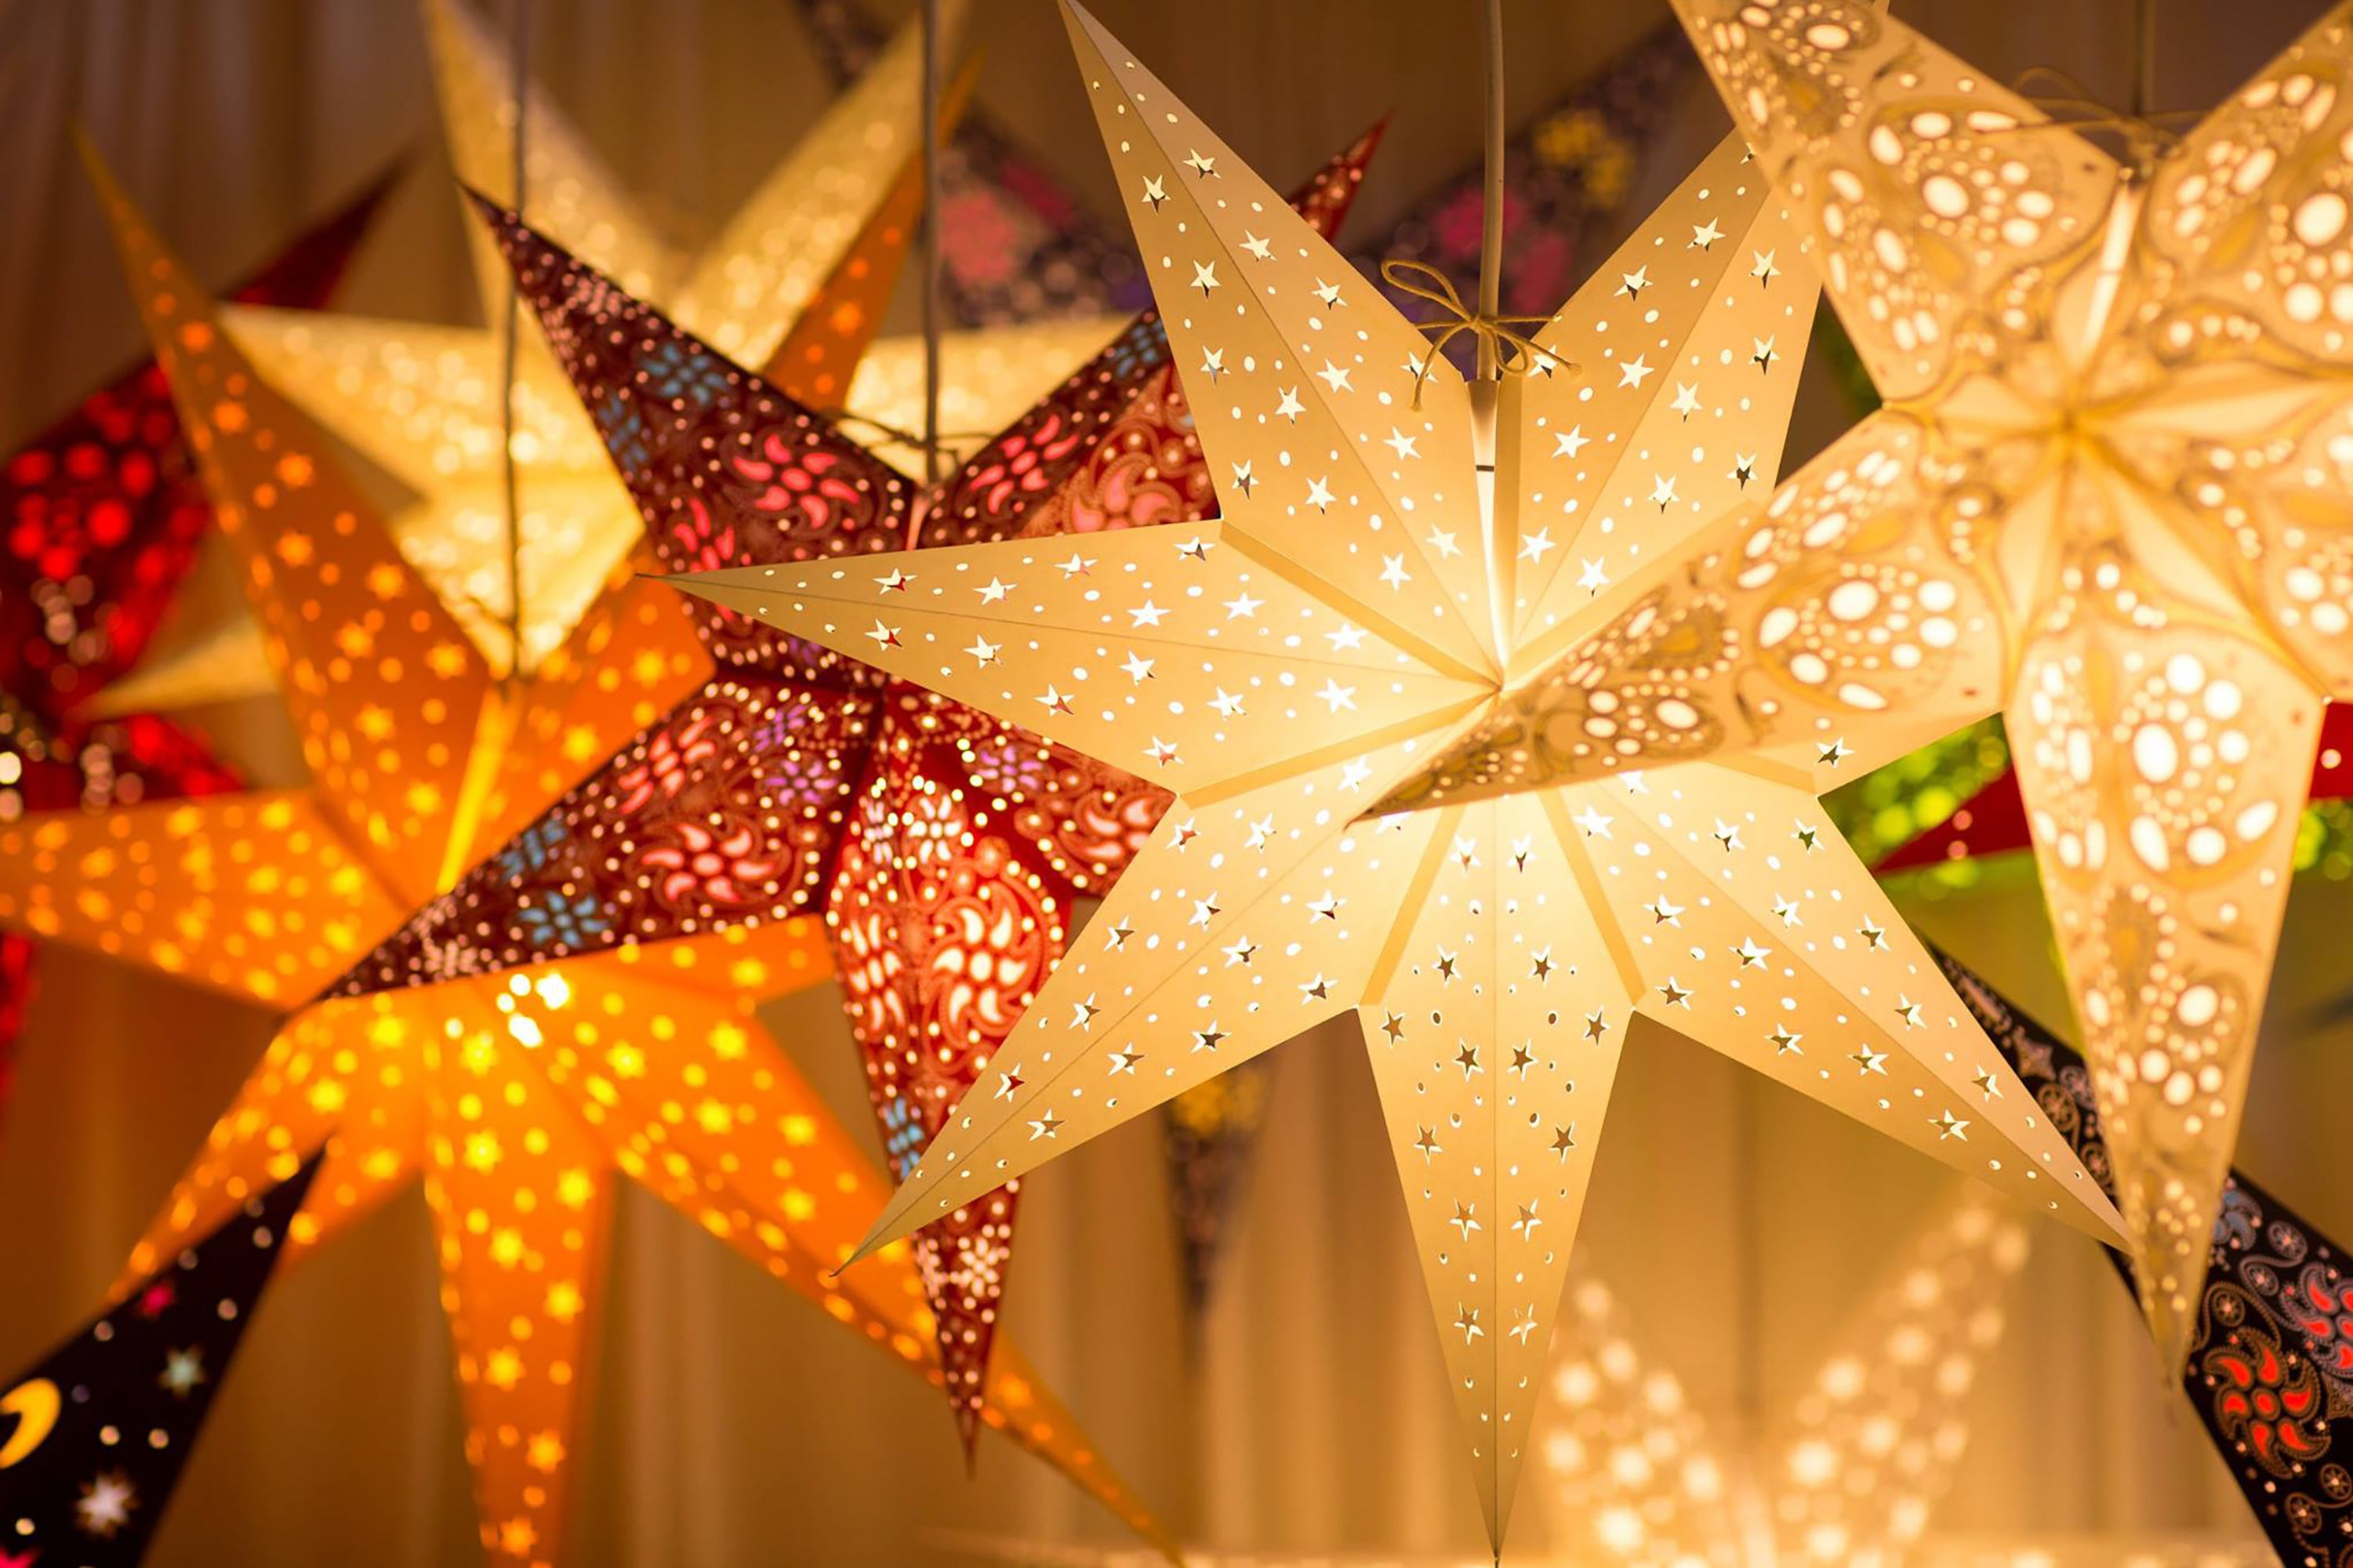 Magical Christmas indoor star lights 